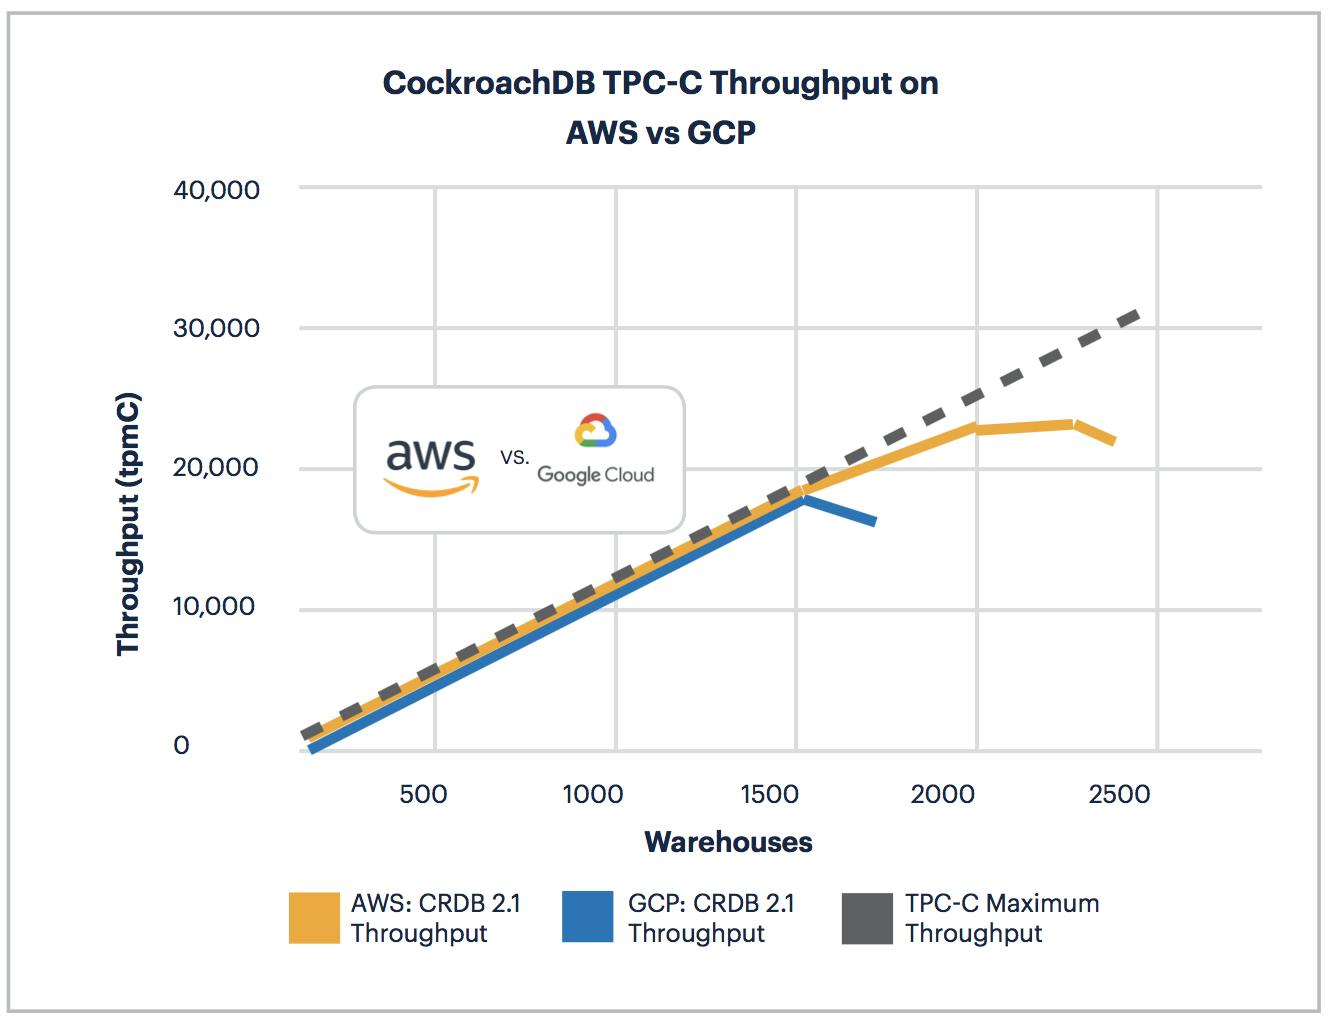 AWS vs GCP: TPC-C Throughput